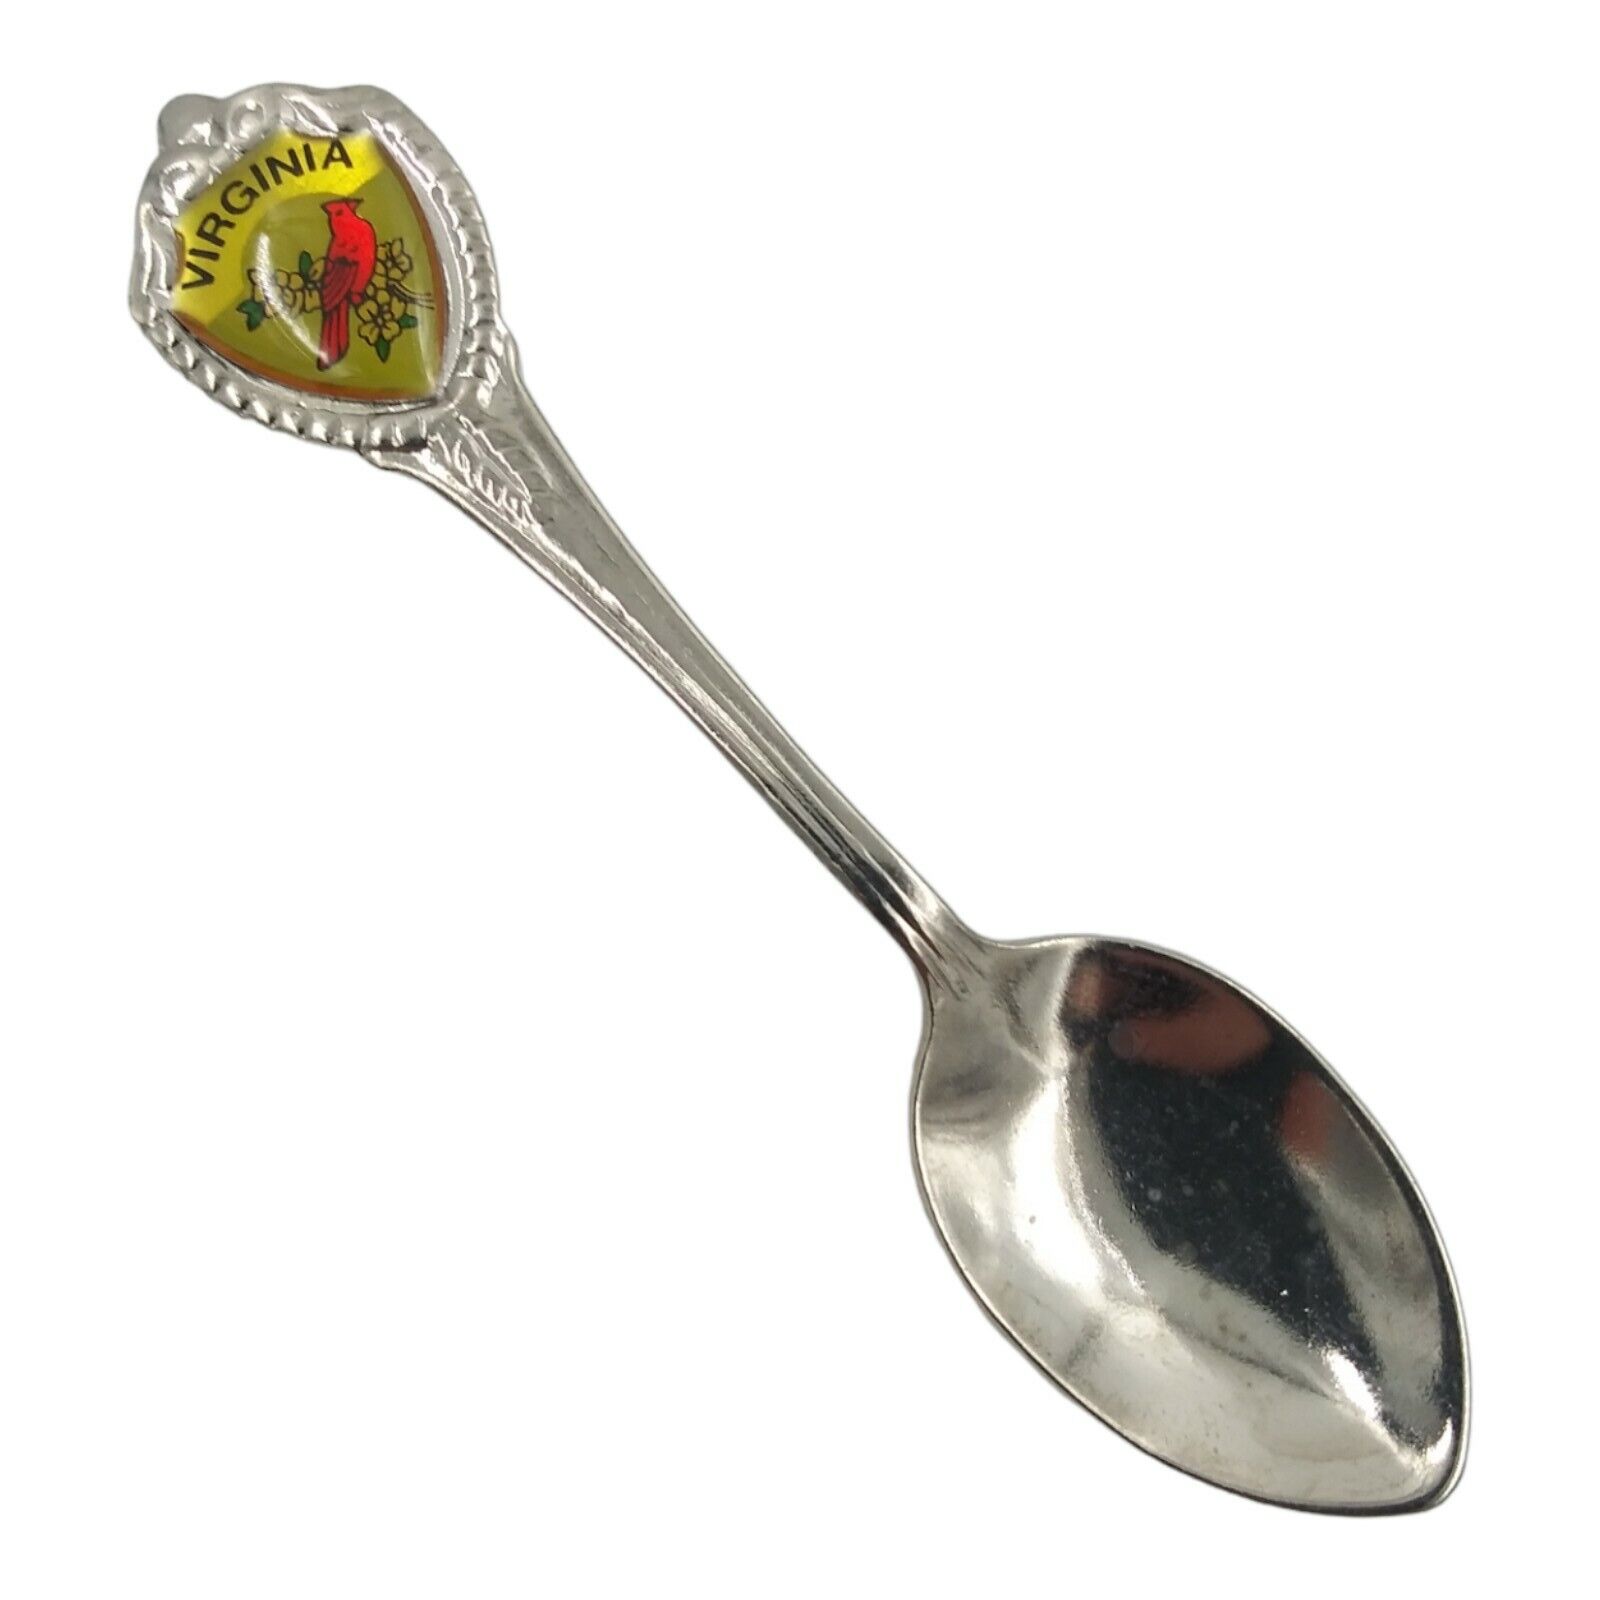 Vintage Souvenir Spoon US Collectible Virginia Cardinal Flowering Dogwood